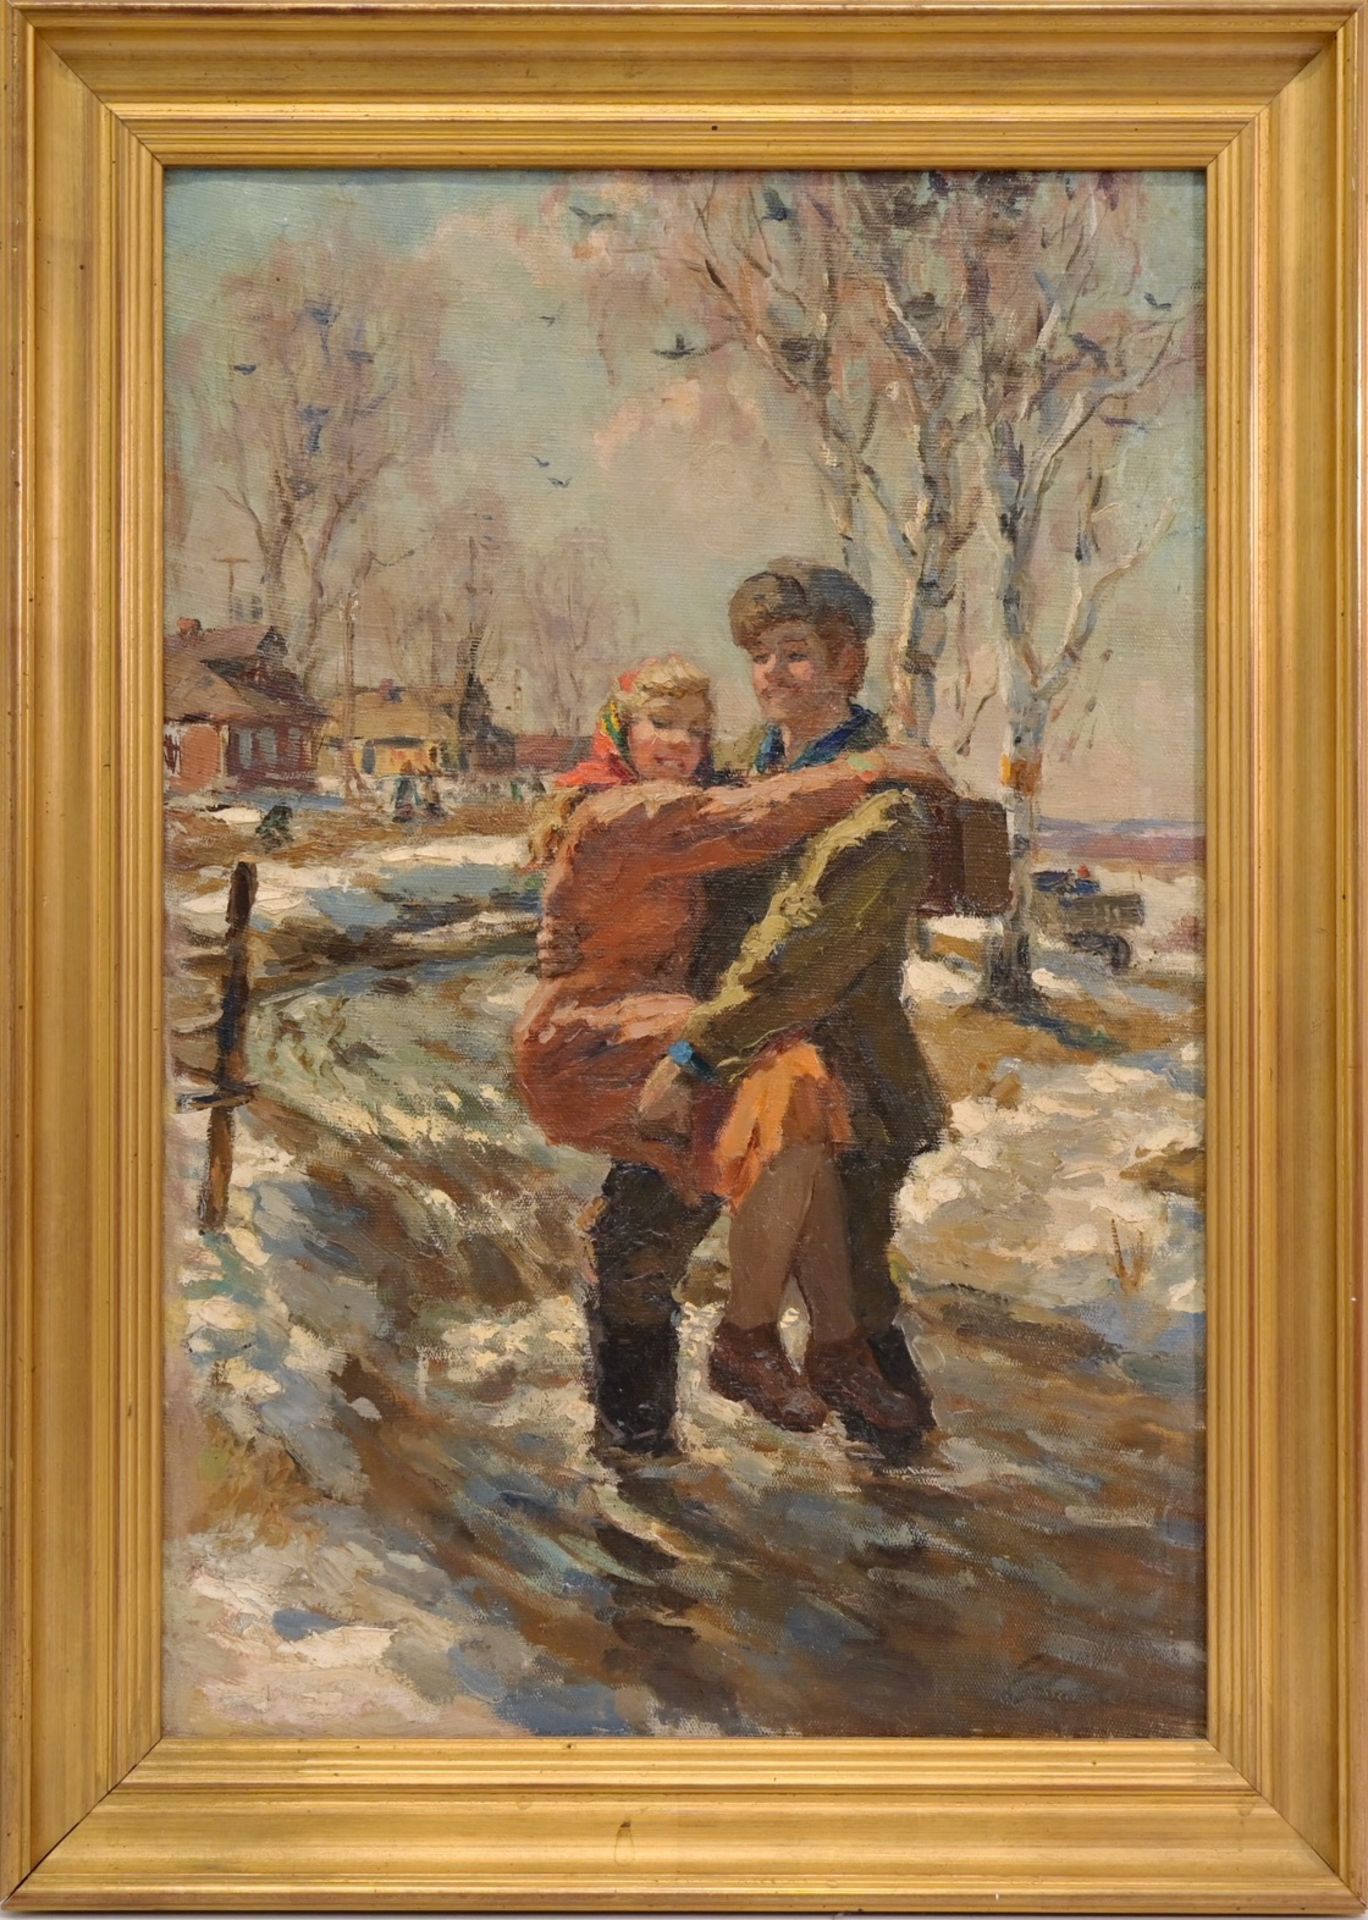 Iossif ILINE (1915-1991) "Spring" 1958, Oil on canvas, Soviet realism painting. - Bild 2 aus 5